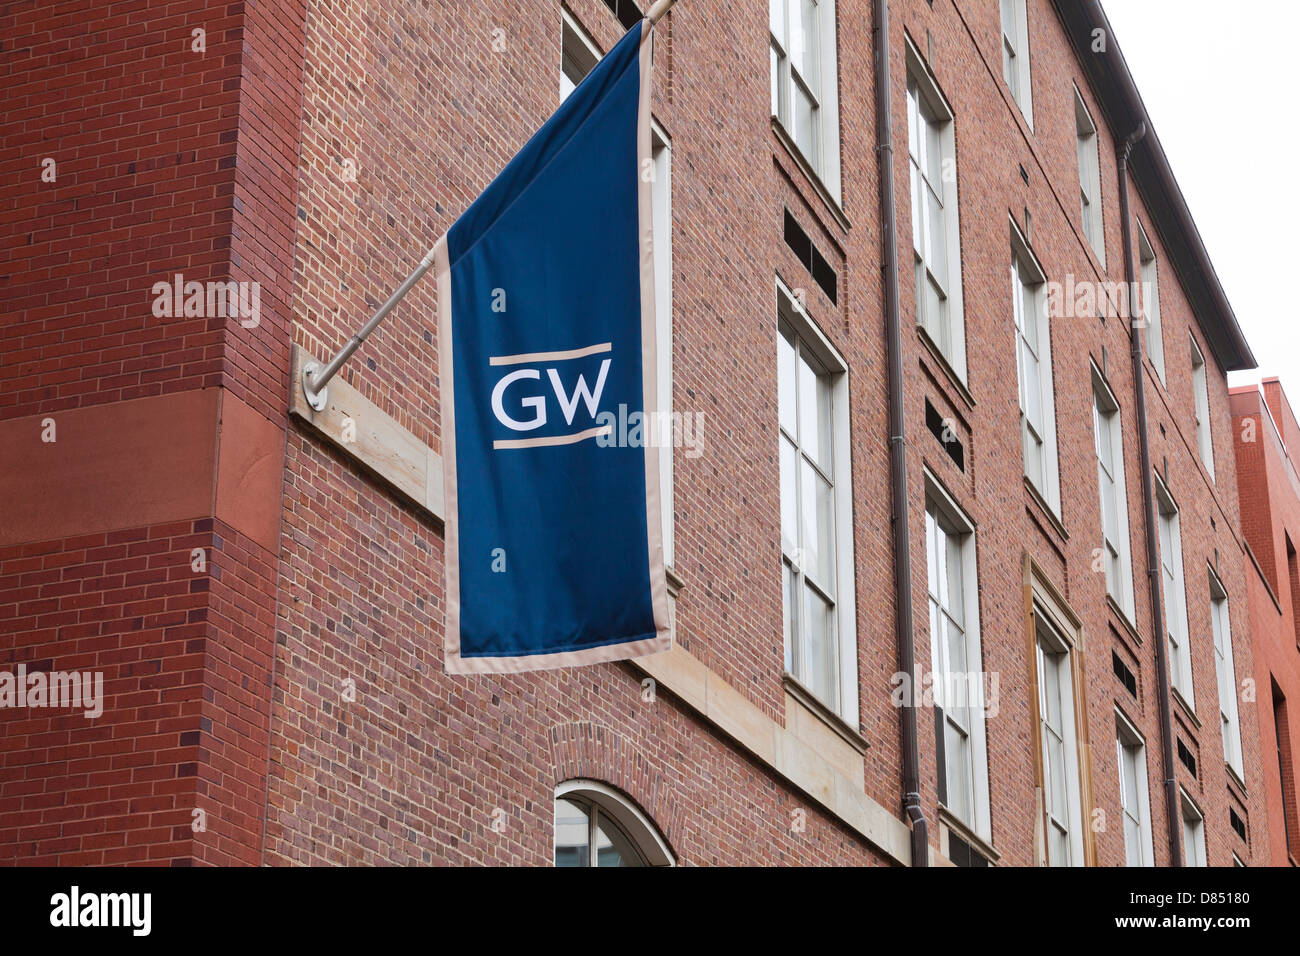 George Washington University banner Banque D'Images